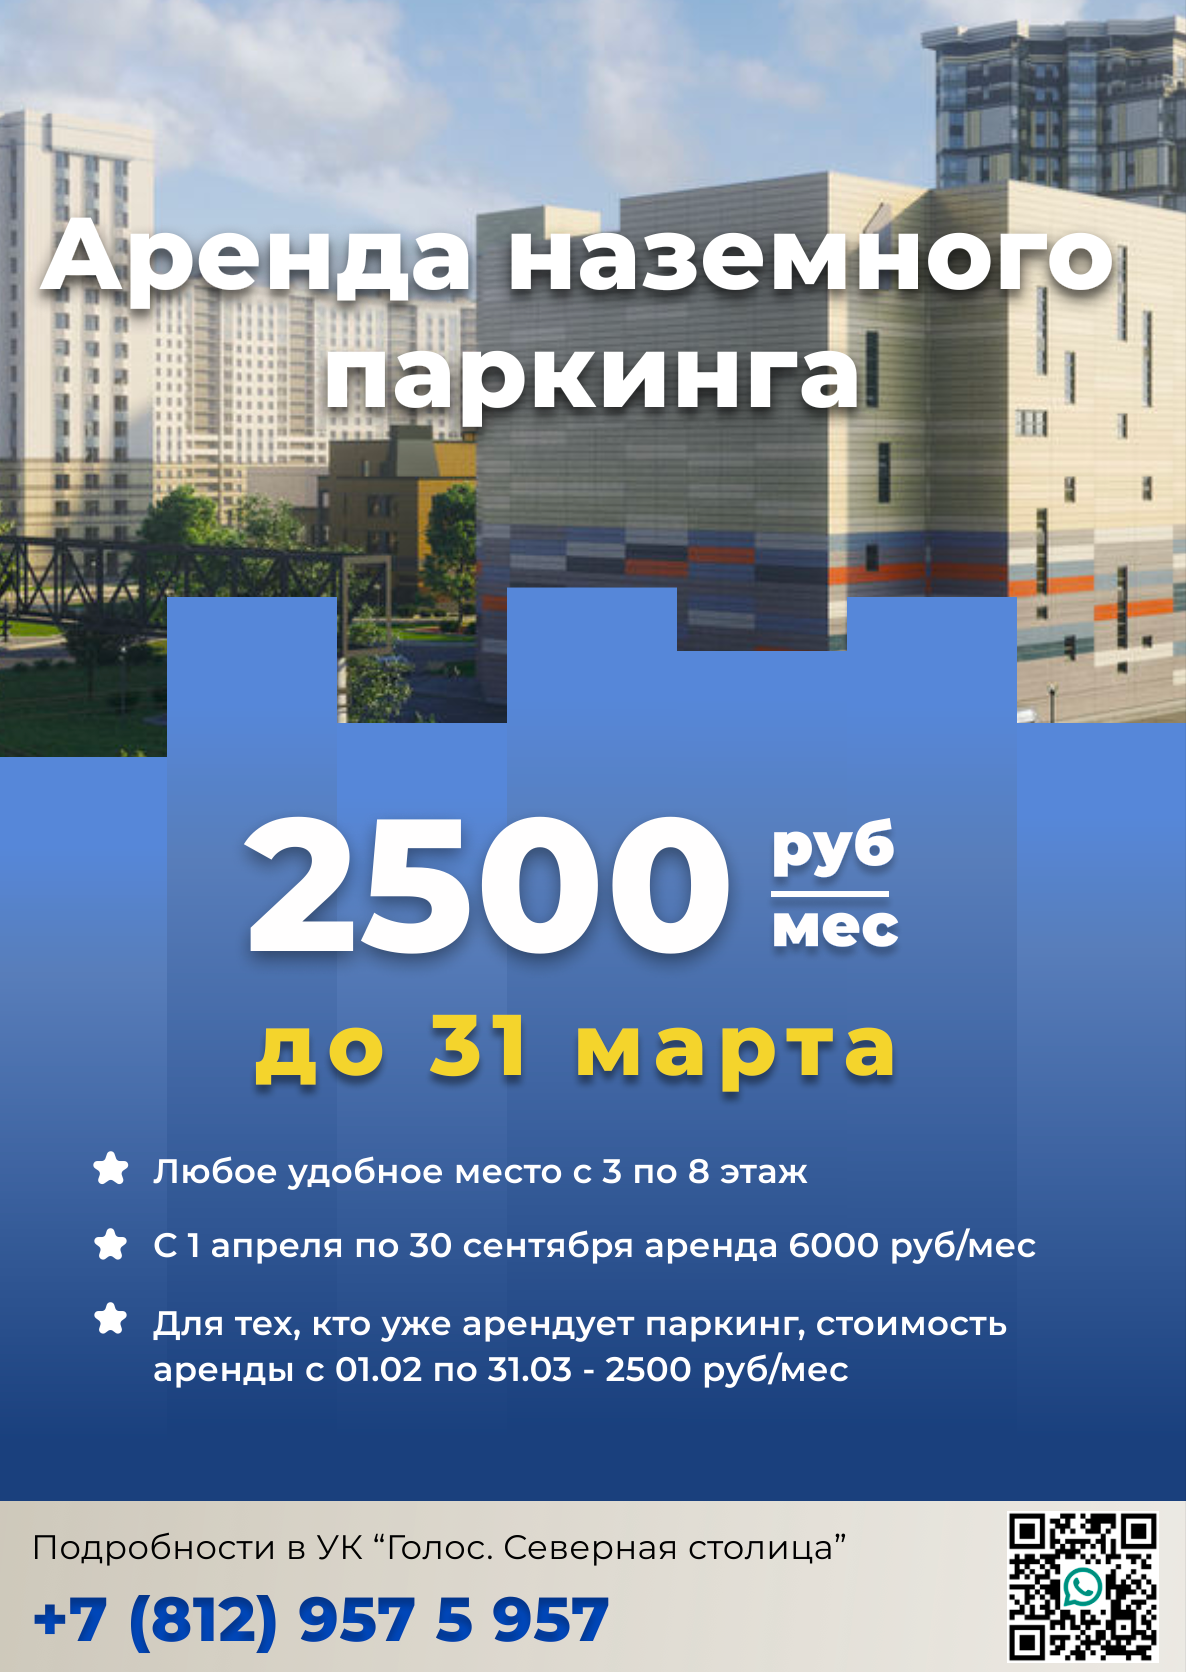 Акция на аренду паркинга в "Приморском квартале"